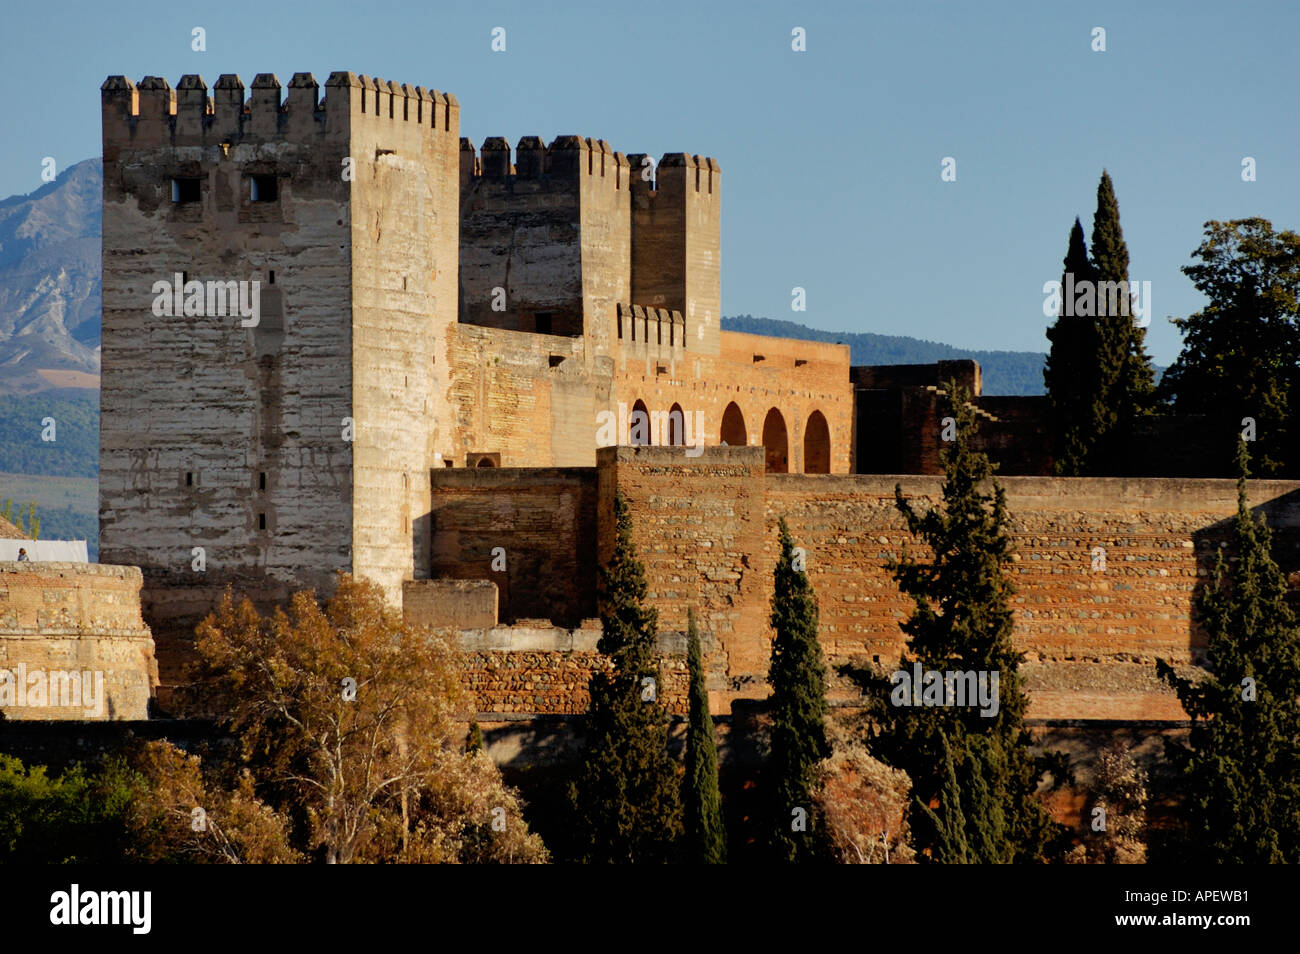 The Alcazaba Towers Of The Alhambra Palace, Granada, Spain Stock Photo